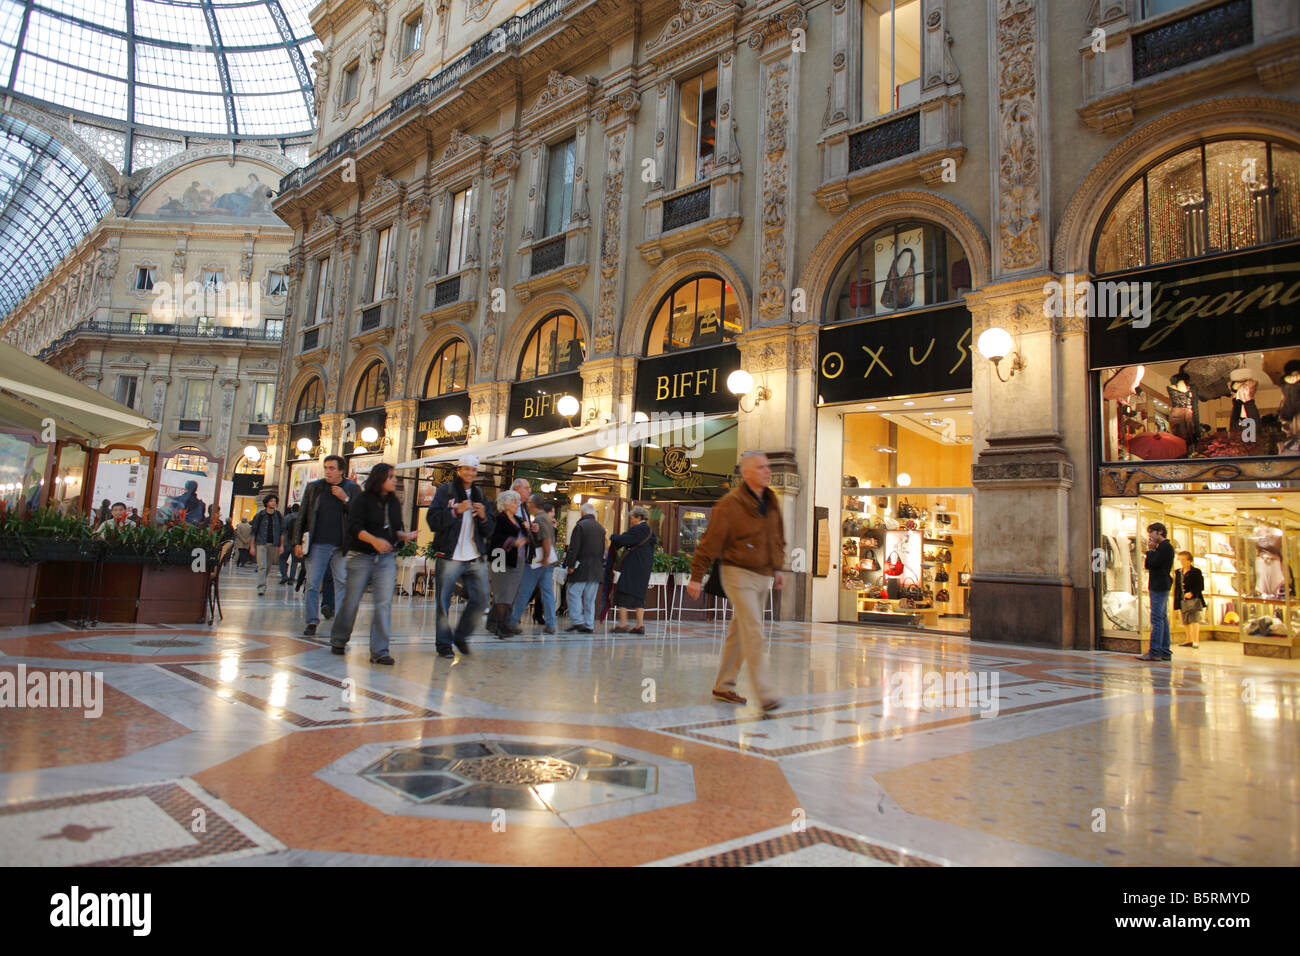 Louis Vuitton store, Galleria Vittorio Emanuele II shopping arcade  interior, Milan, Italy Stock Photo - Alamy